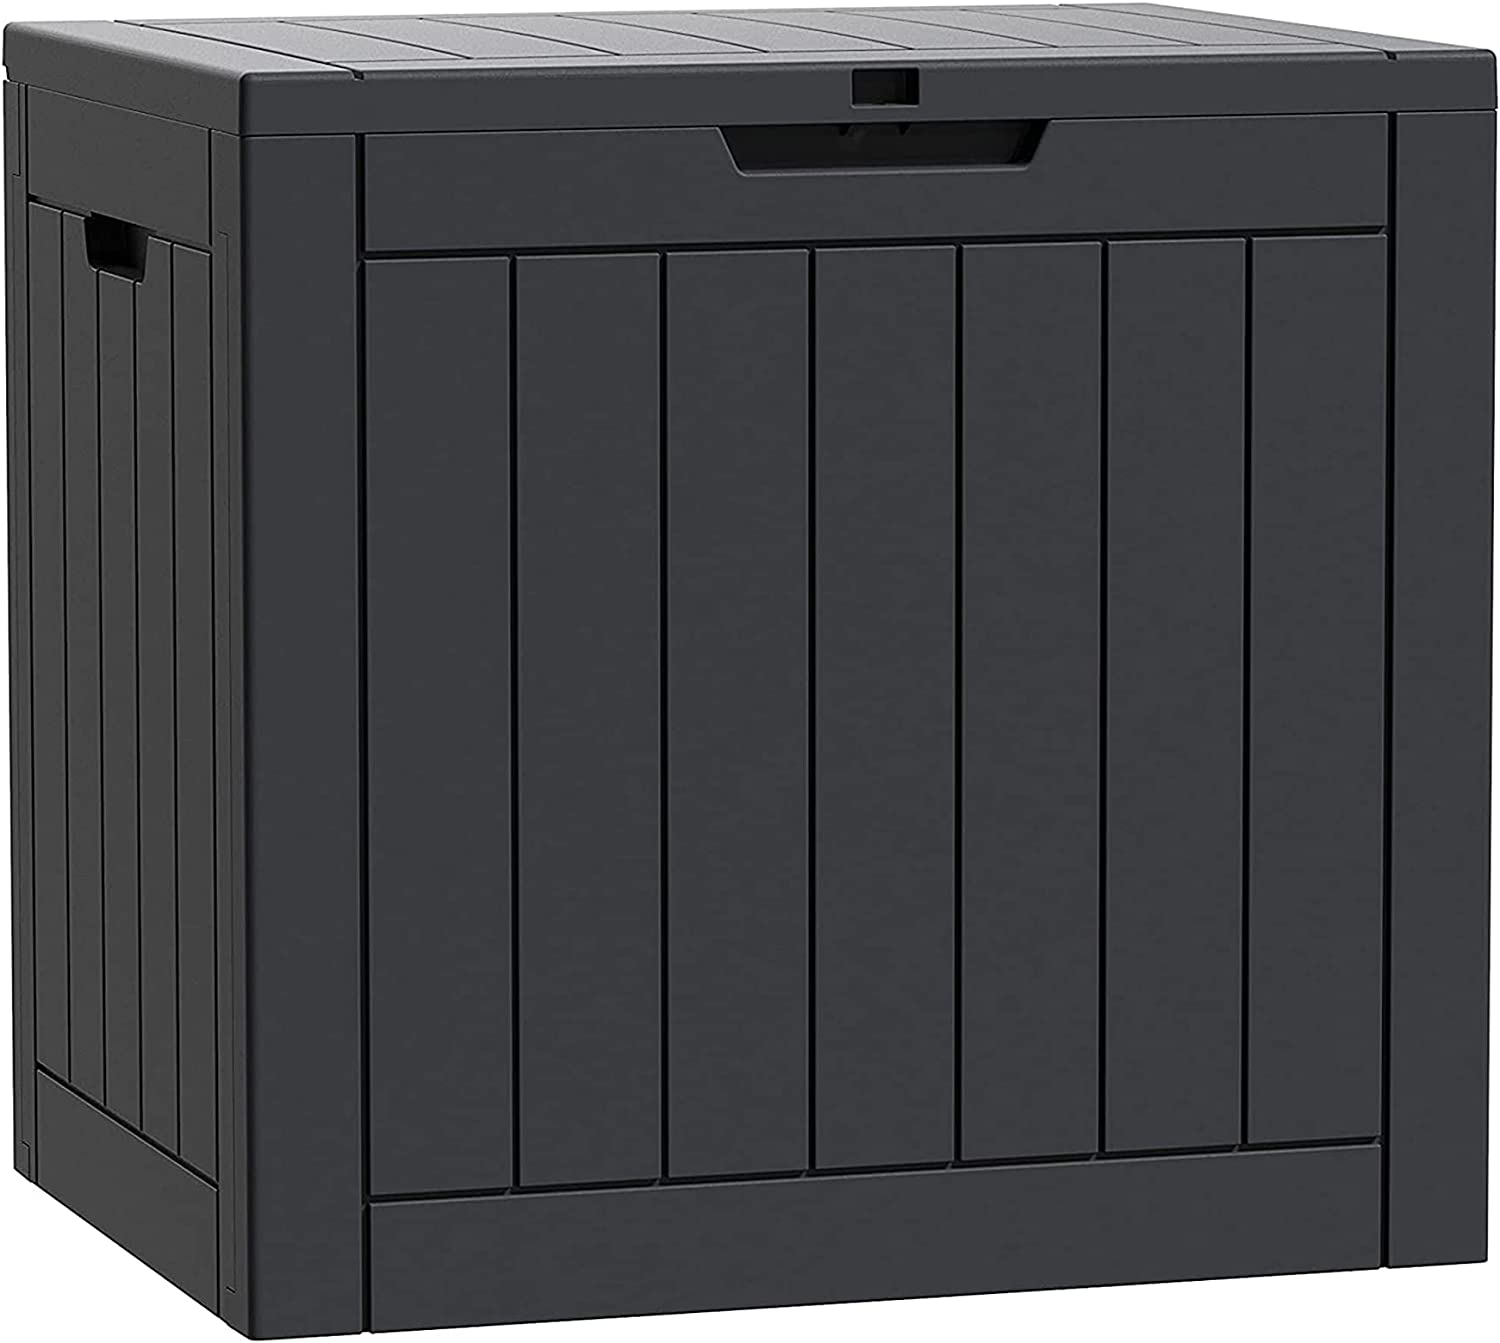 realife Eco-Friendly Resin Deck Box & Patio Storage, 30-Gallon